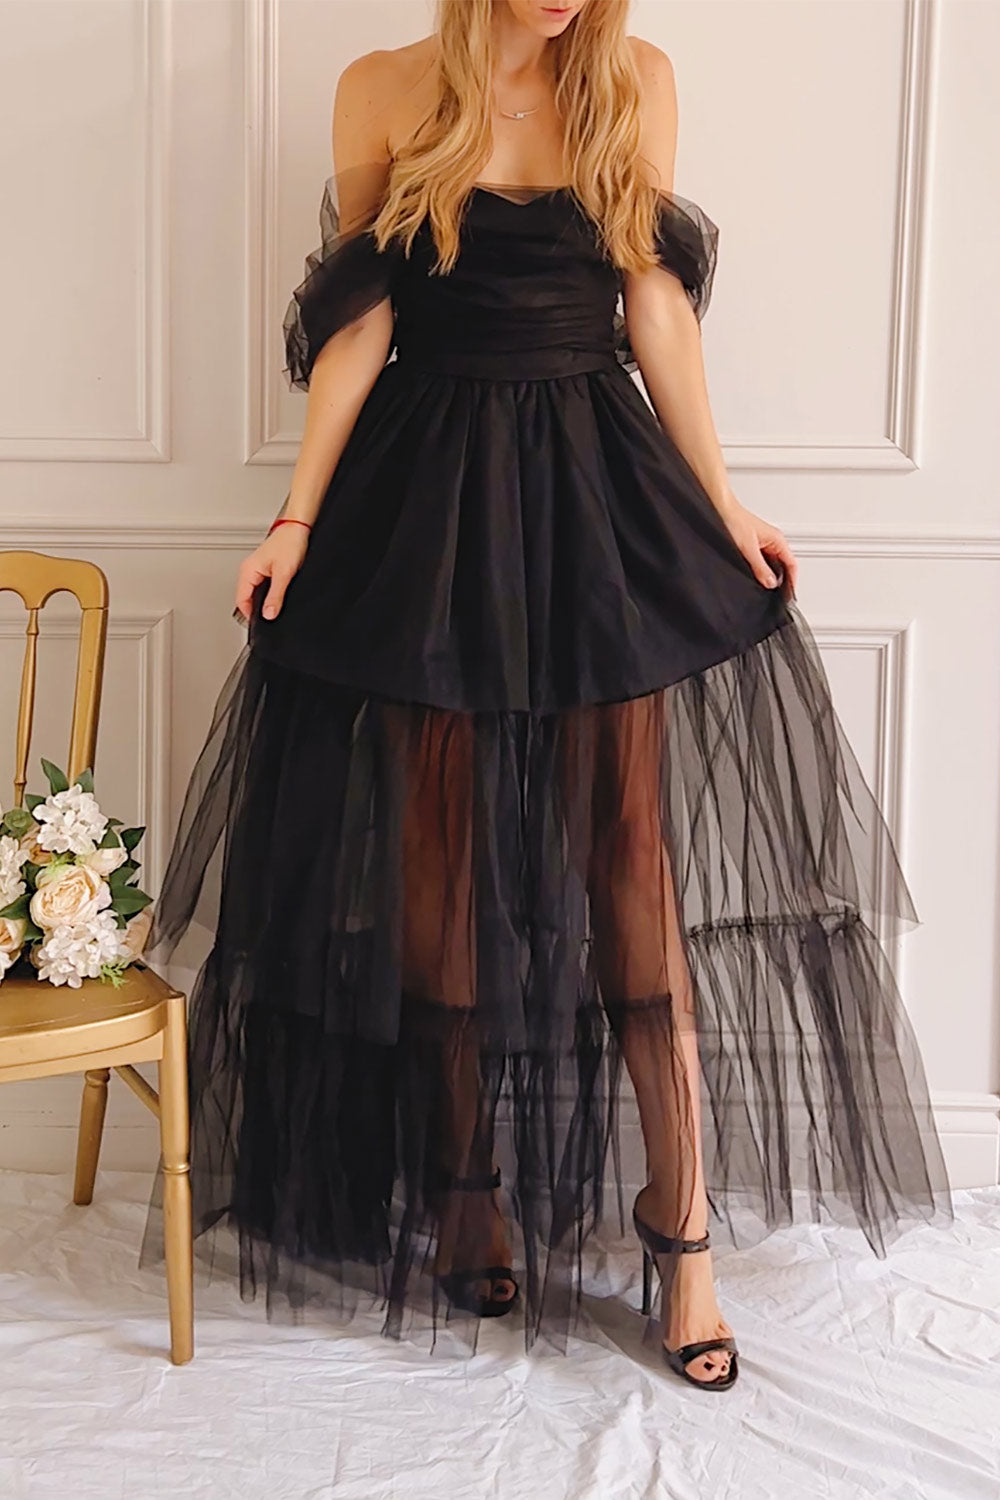 La Mousse Noir' Black Corset Draped Tulle Dress: Elegantly